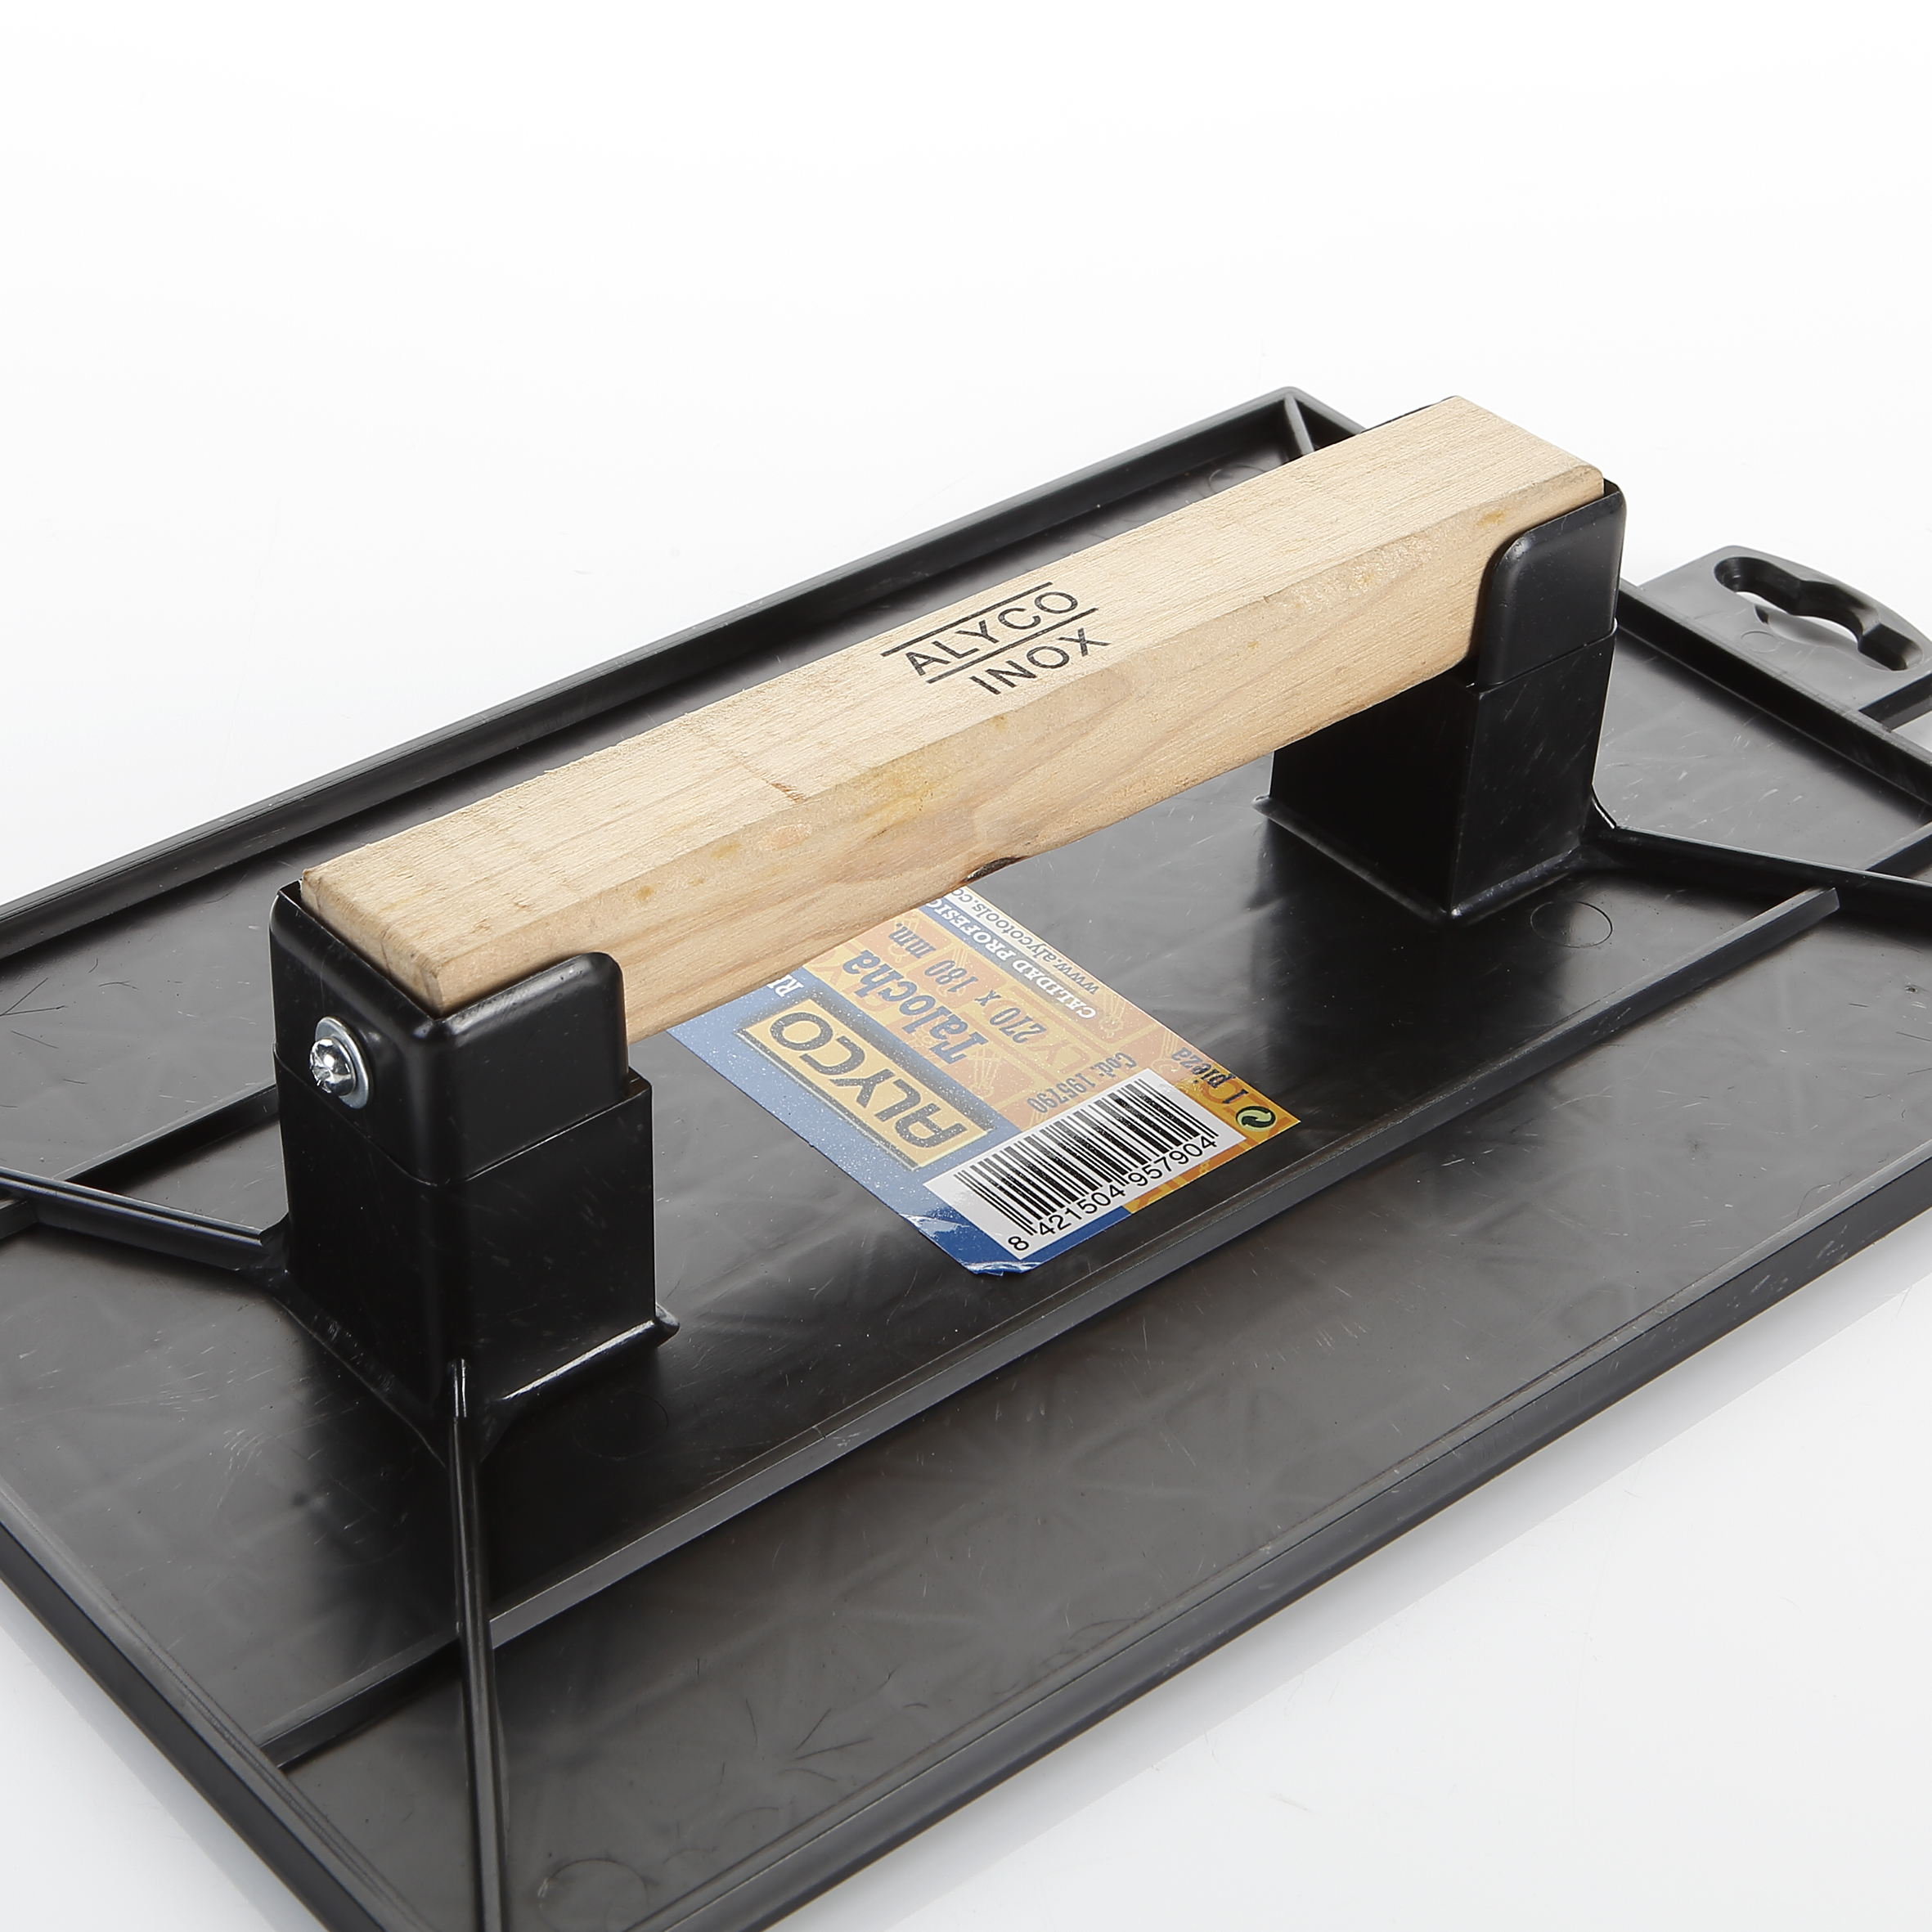 Talocha rectangular de plastico 270 x 180 mm mango madera Alyco 195790 